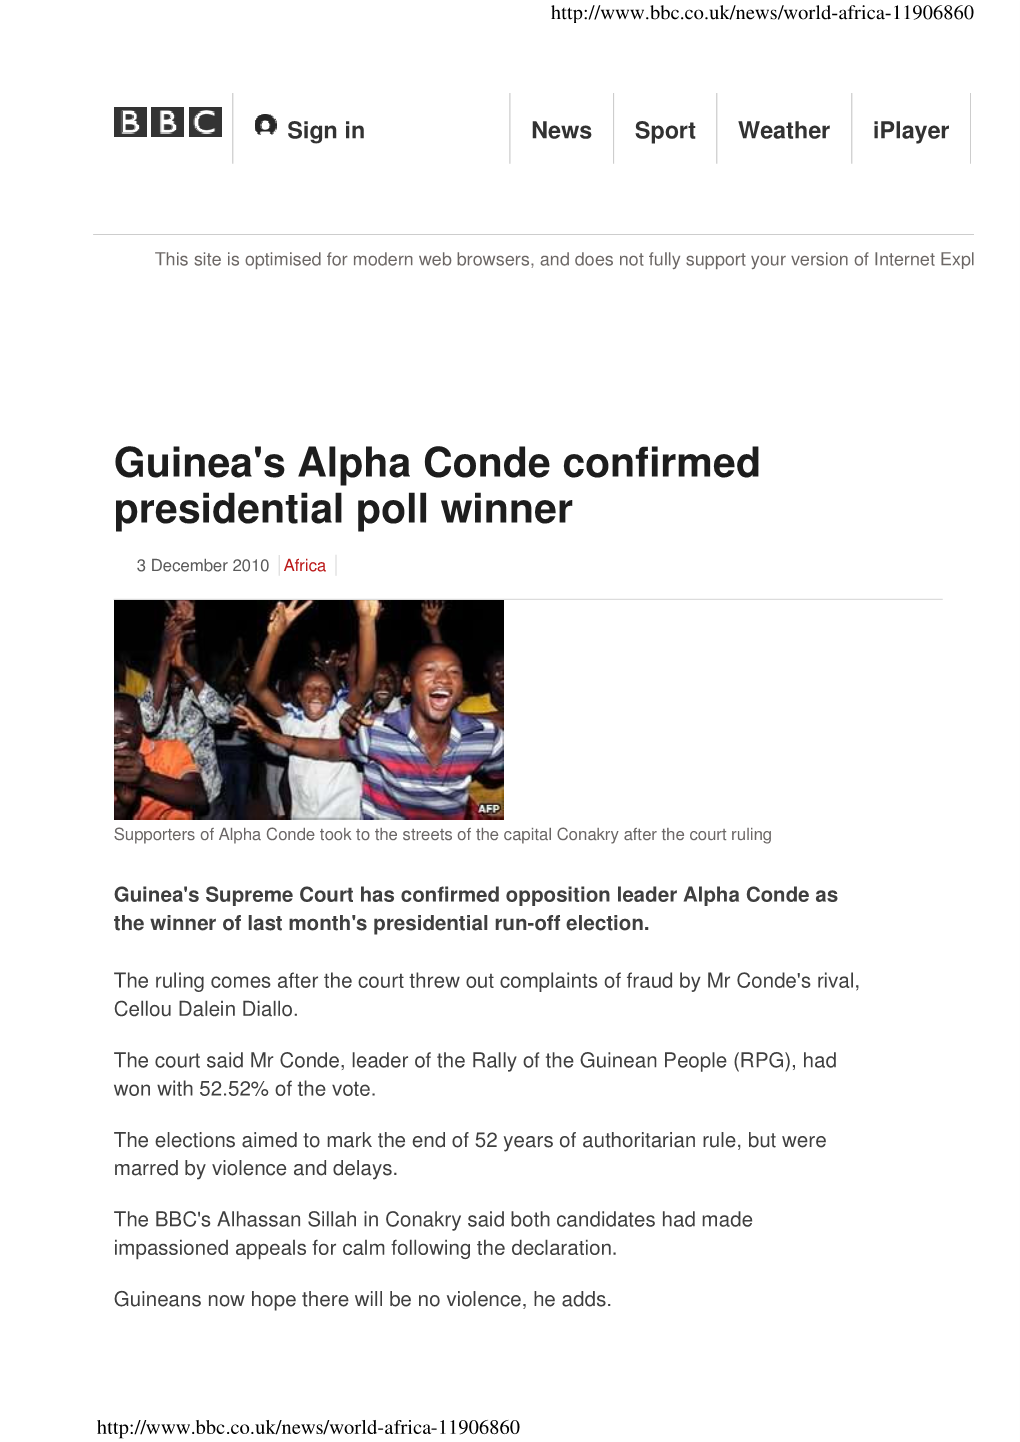 Guinea's Alpha Conde Confirmed Presidential Poll Winner